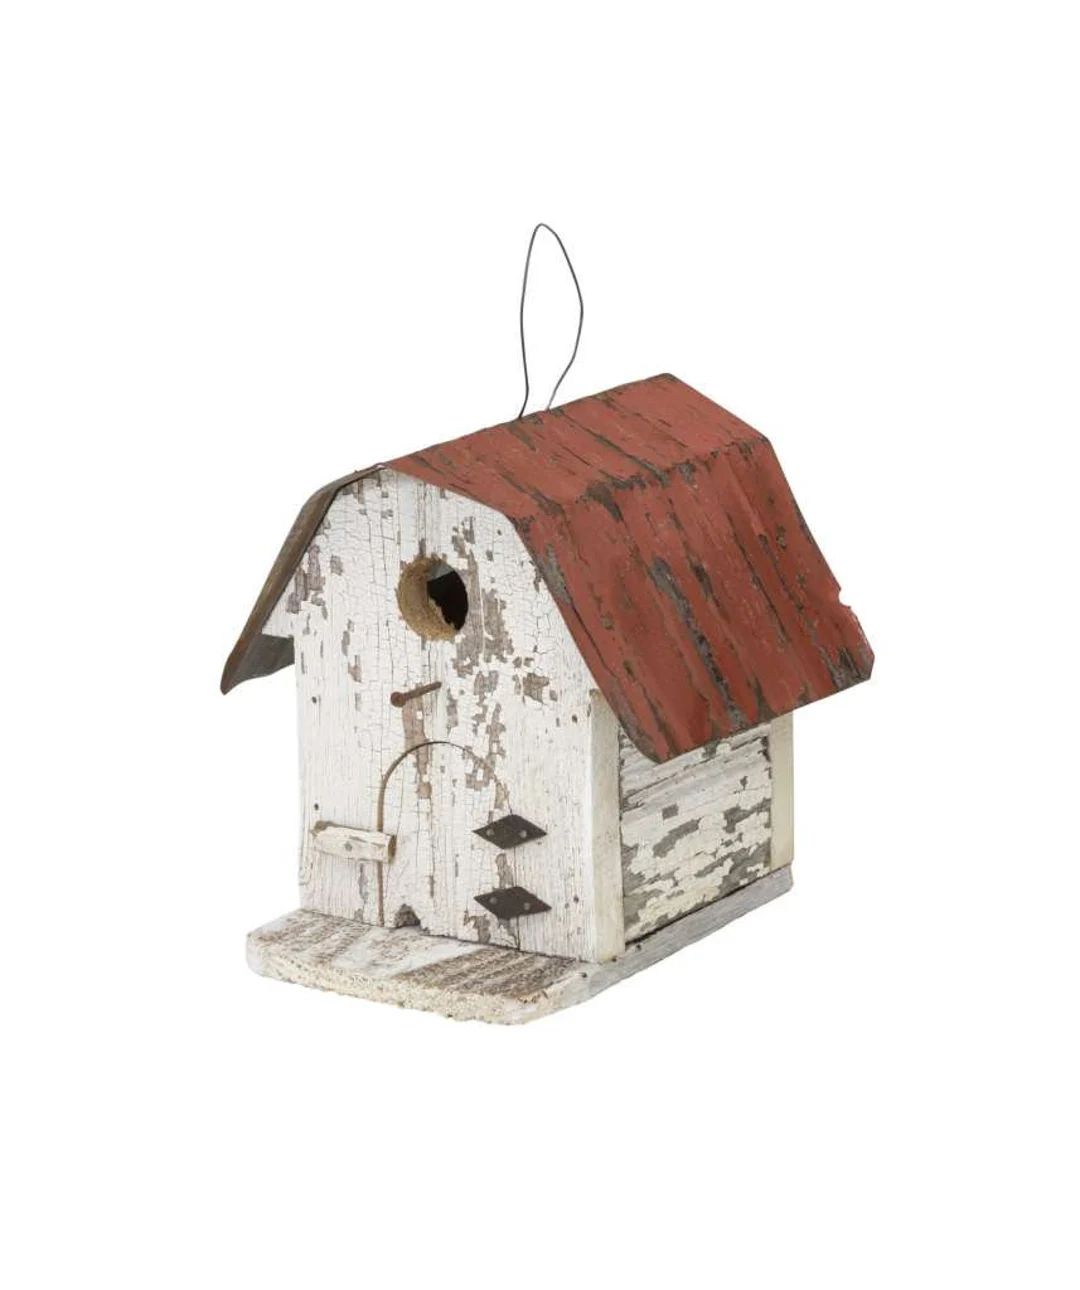 Hanging Birdhouse | Rustic Wren Birdhouse | Decorative Birdhouse Made From Reclaimed Wood | Etsy (US)